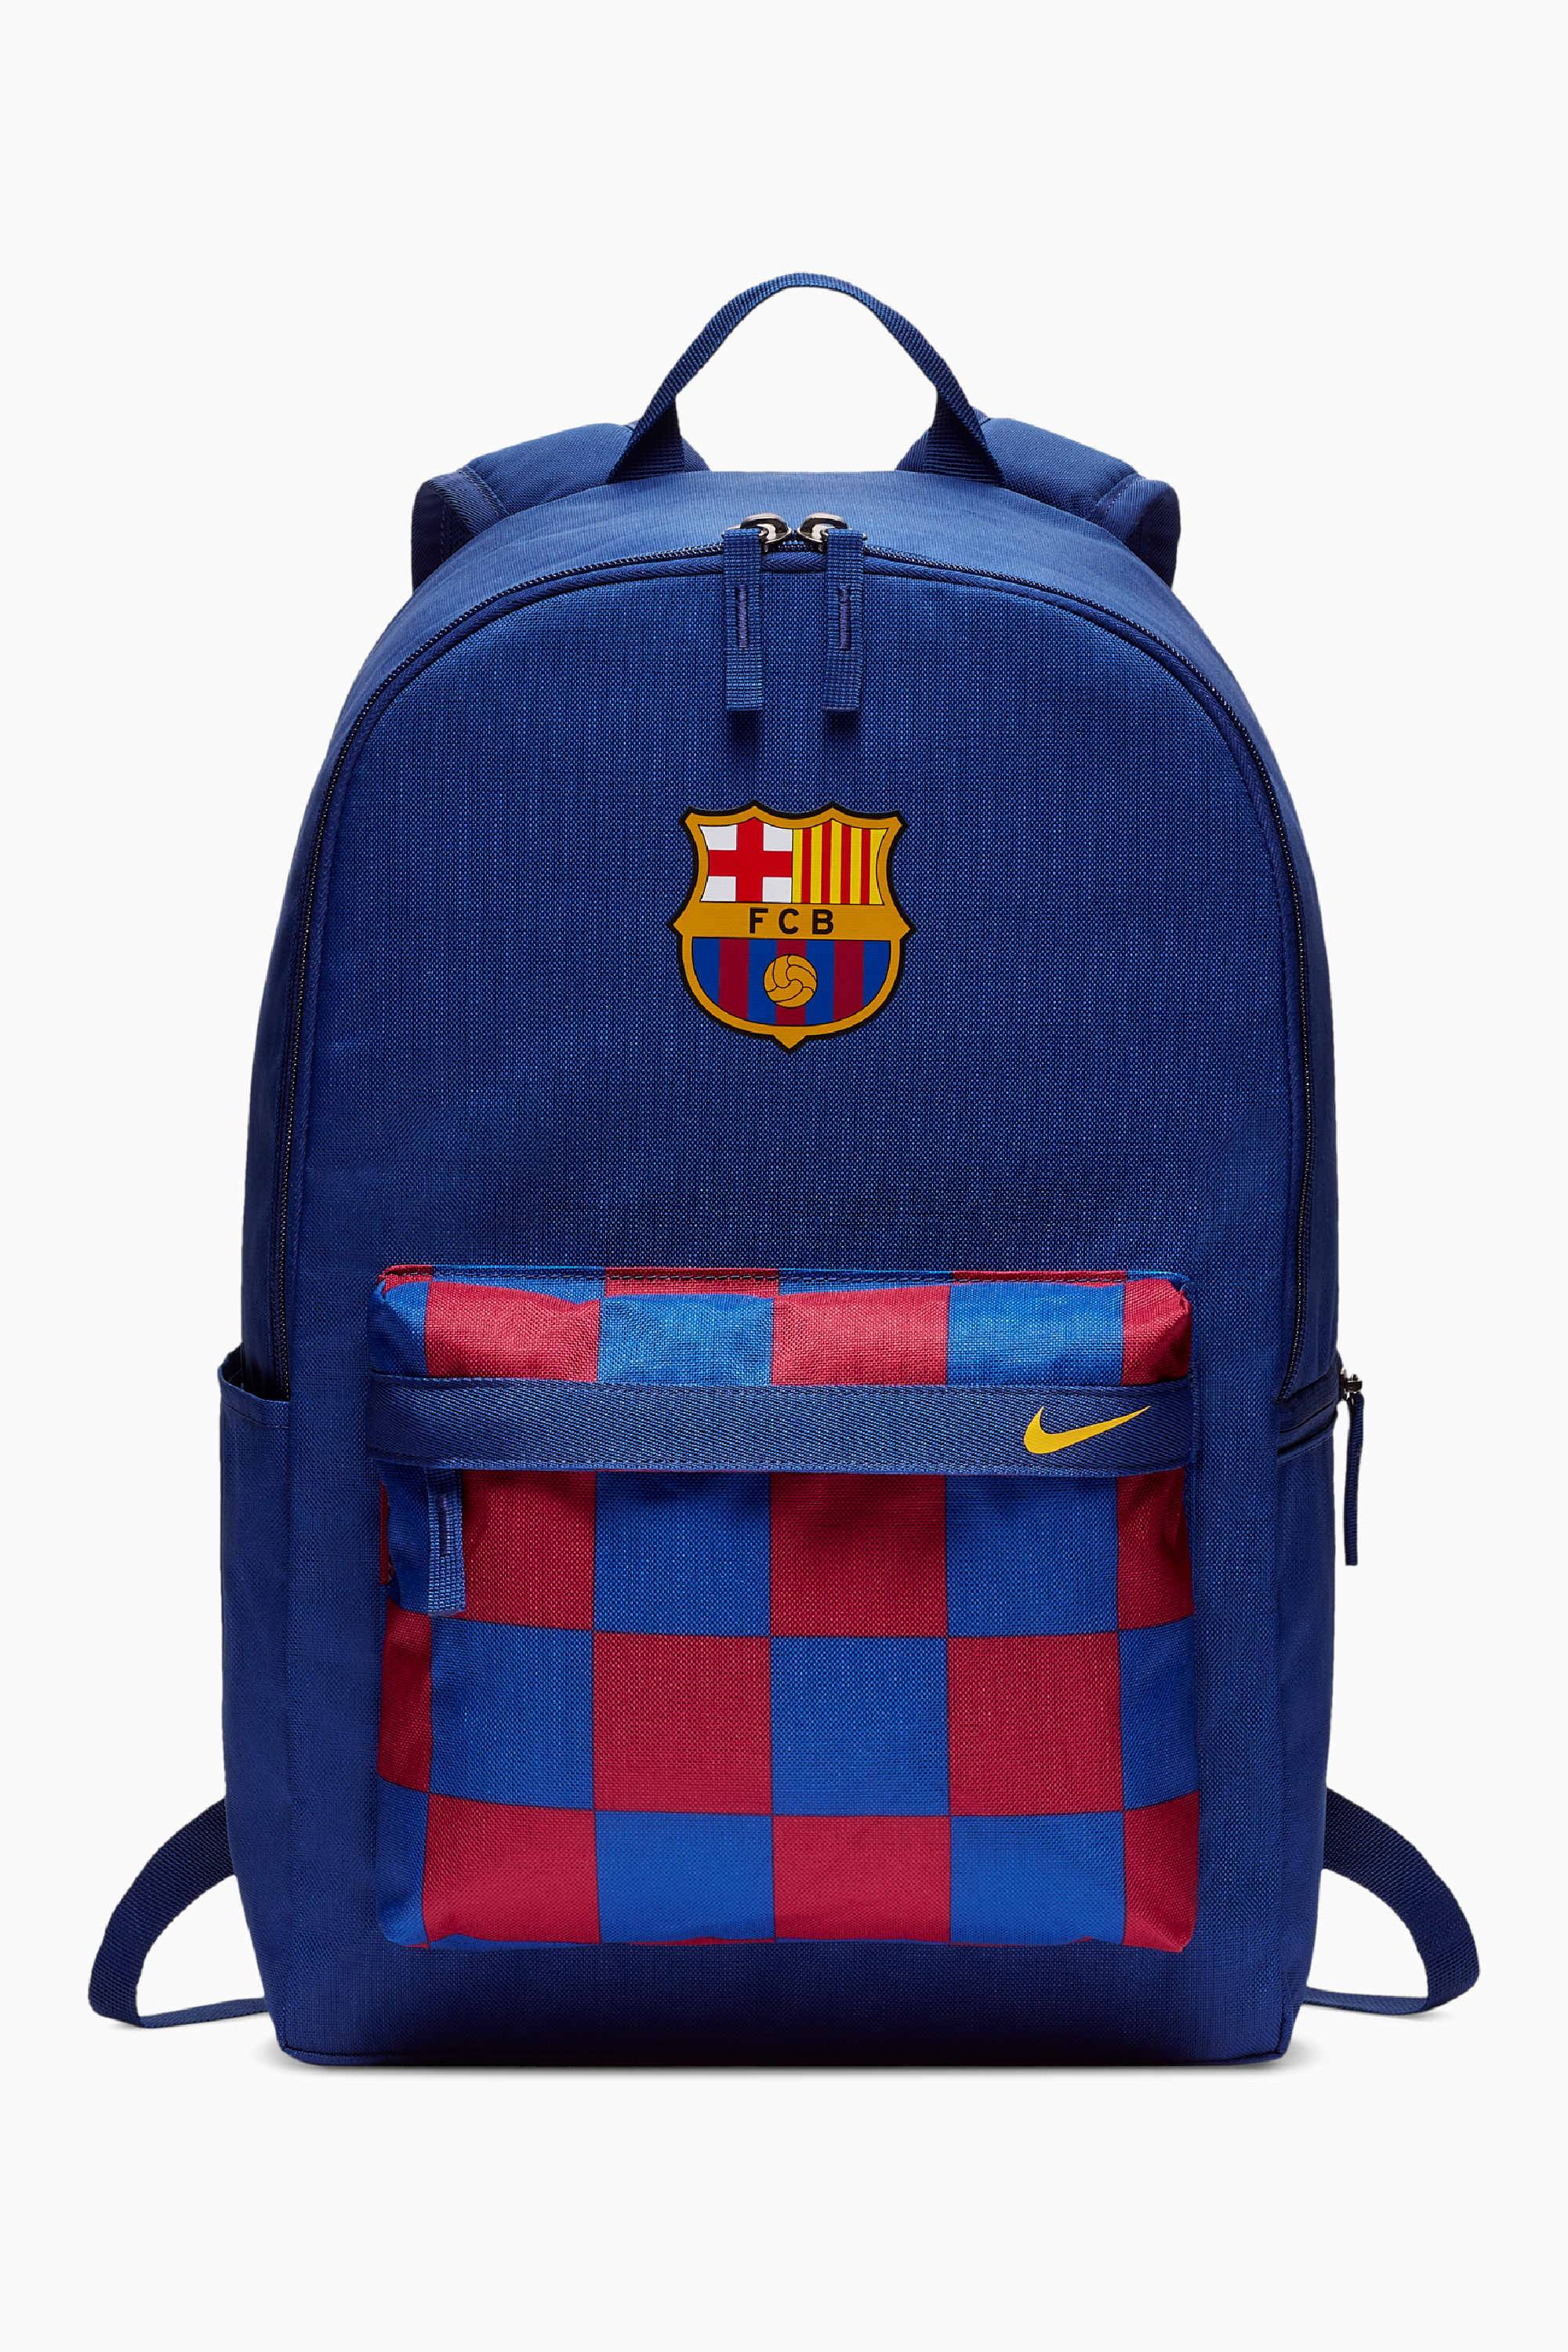 Backpack Nike FC Barcelona 19/20 Stadium | R-GOL.com boots & equipment